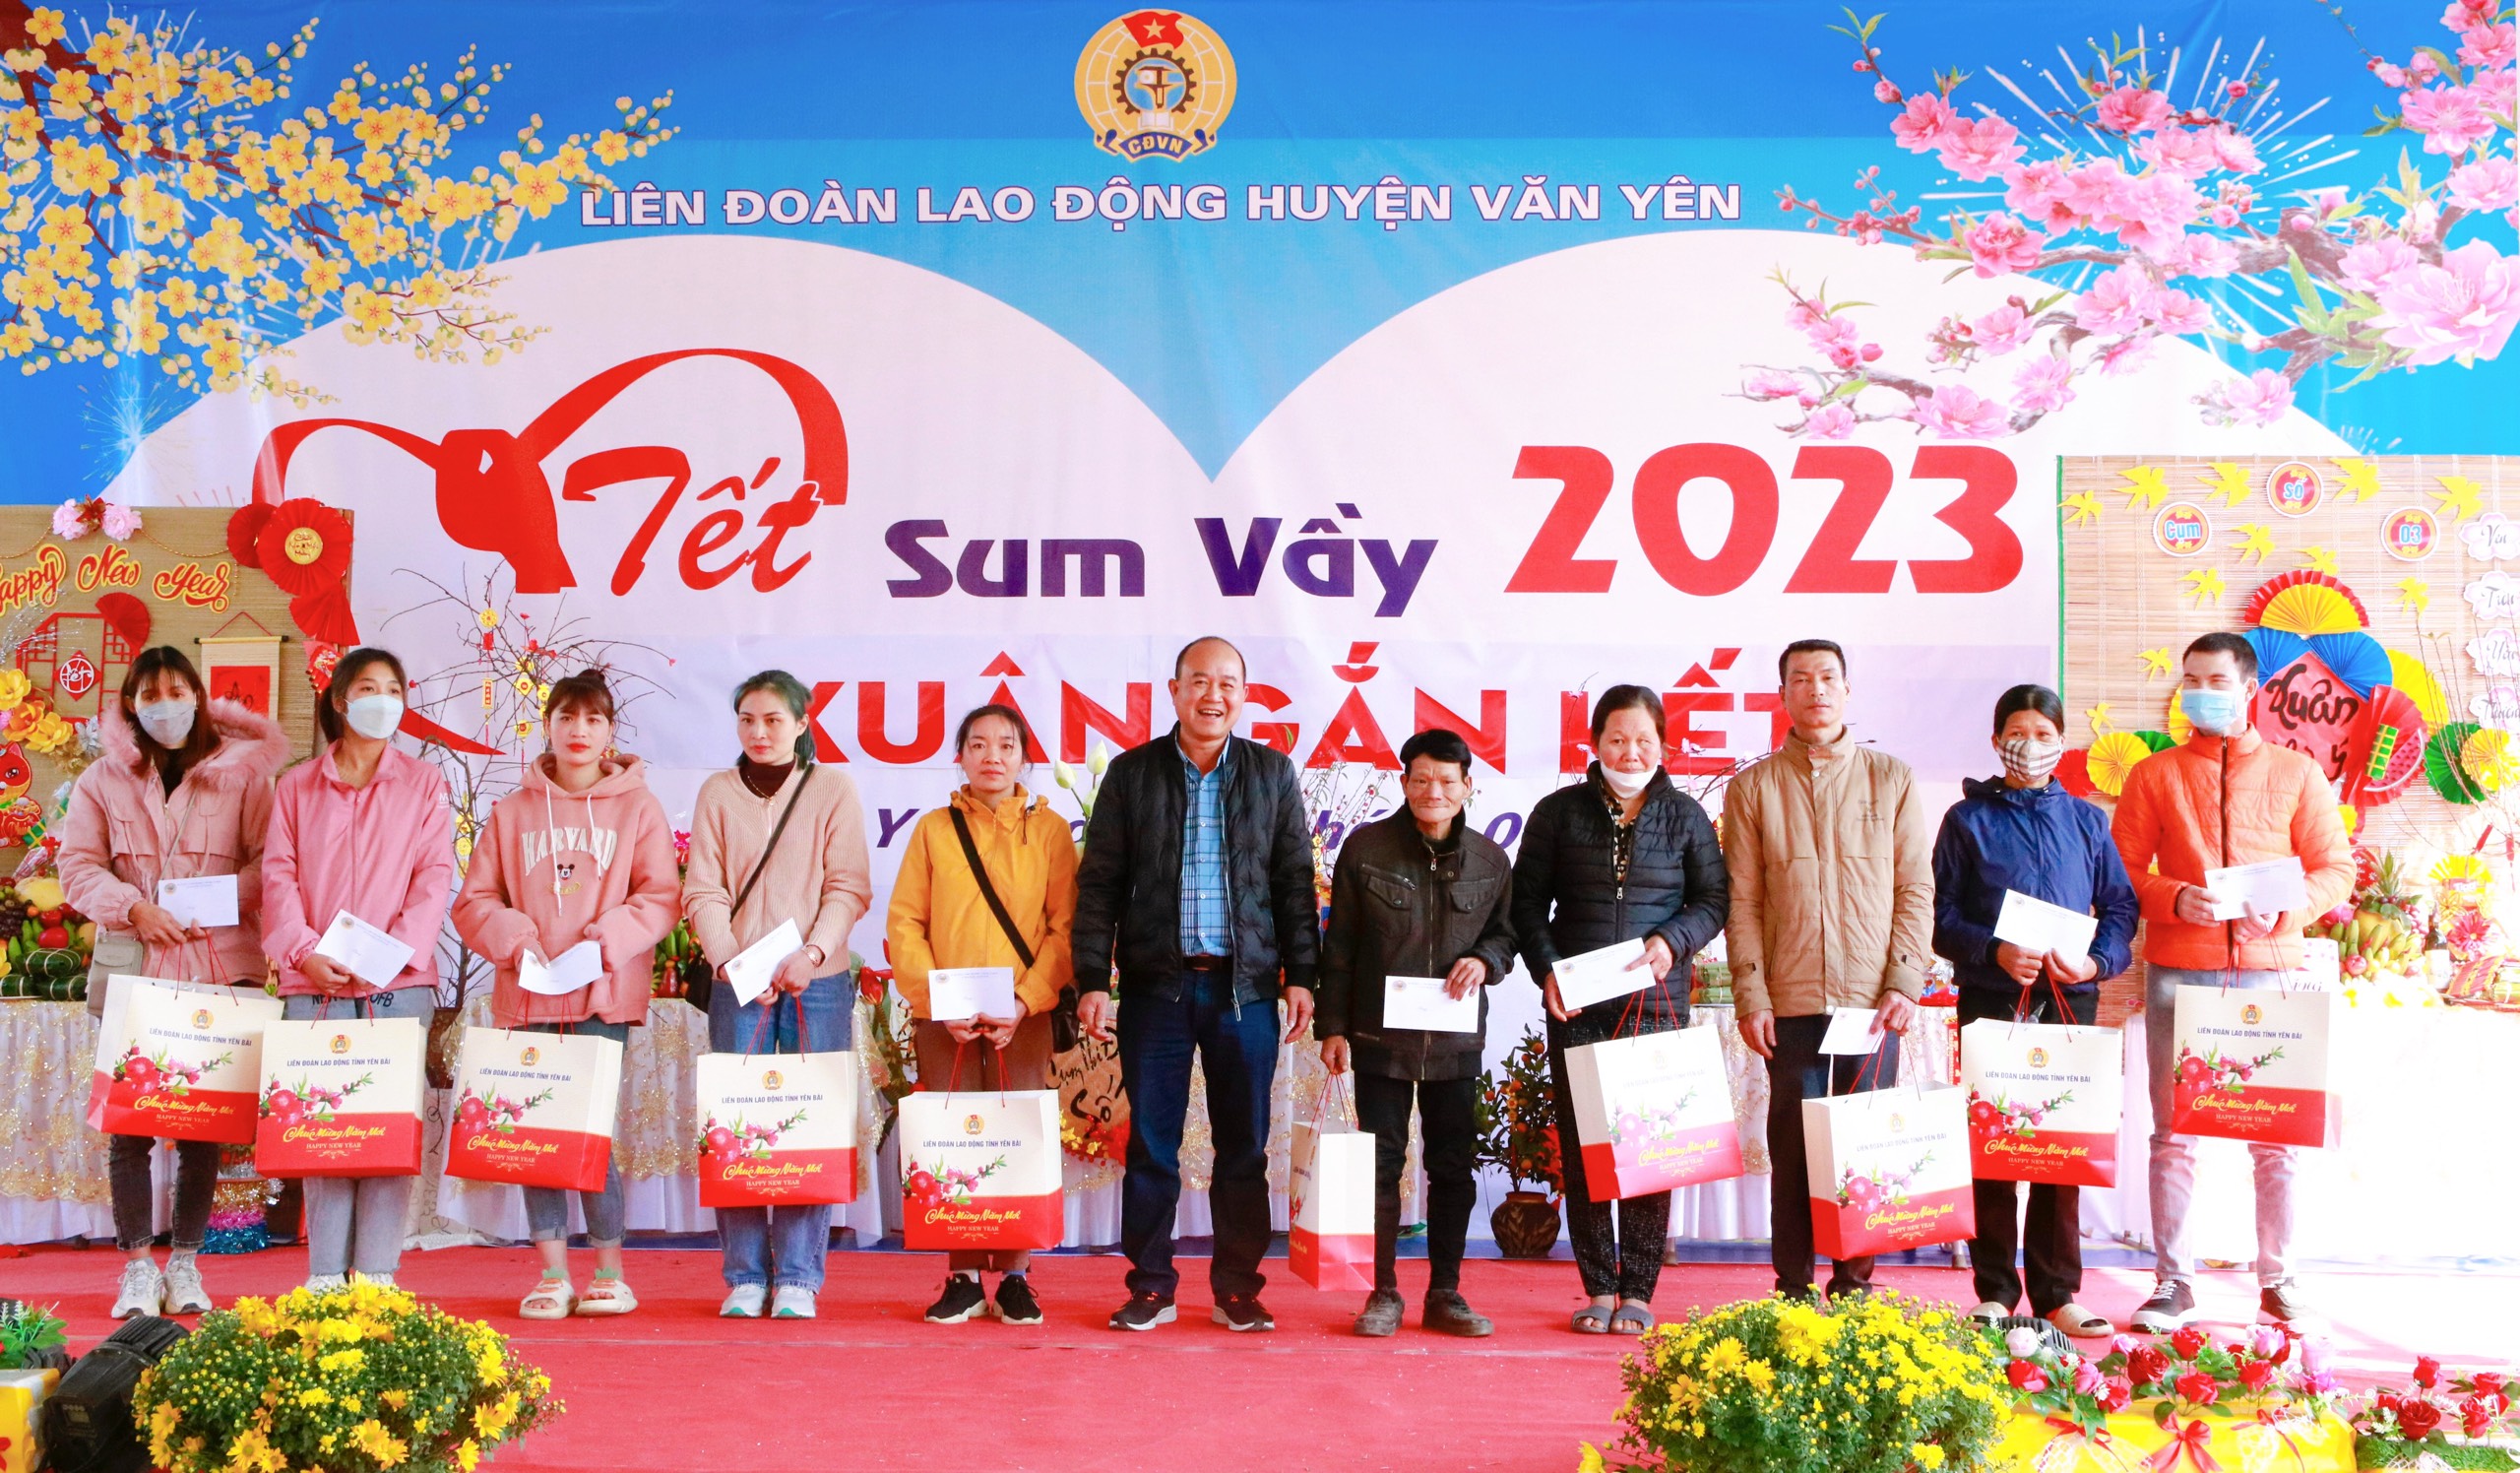 Farmers in Van Yen - Yen Bai received Tet gifts from Visimex